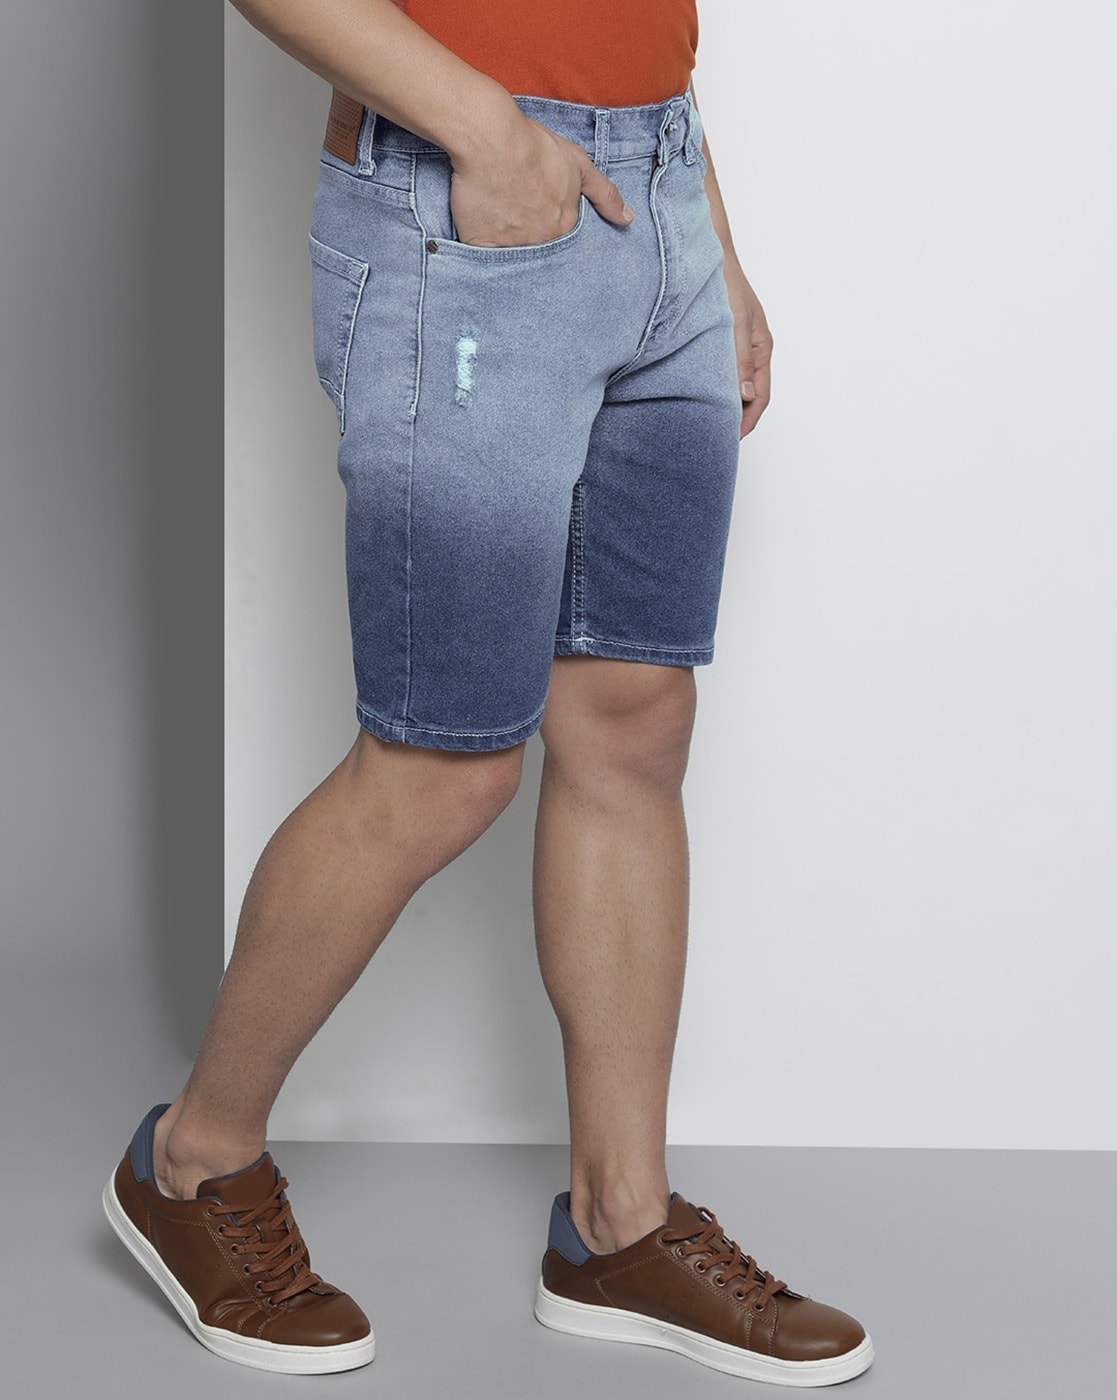 Men Denim Shorts ( length above knee,slim fit)